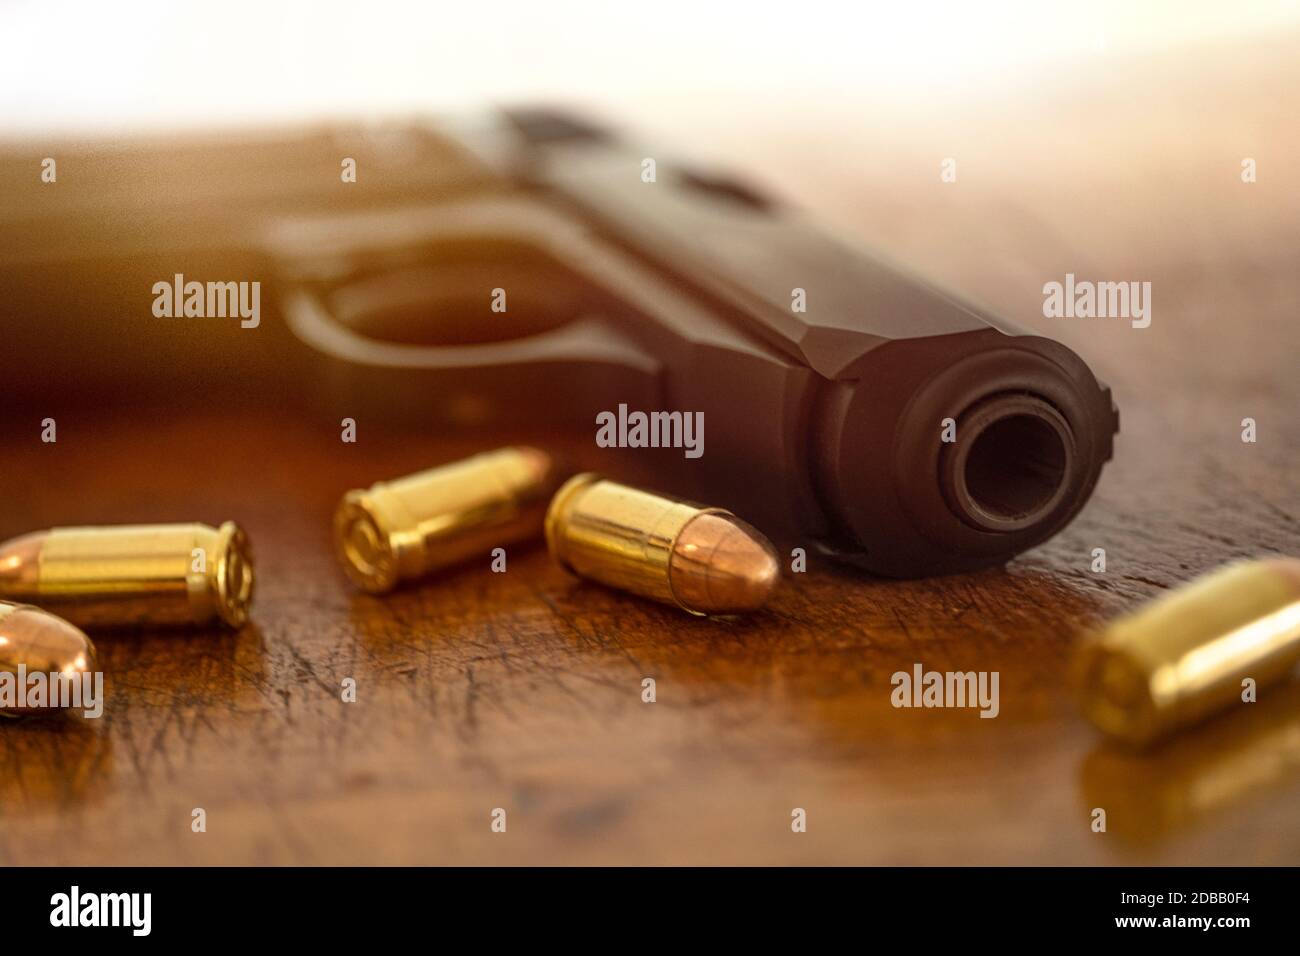 Goldkugeln und Pistole auf Holzoberfläche Stockfoto